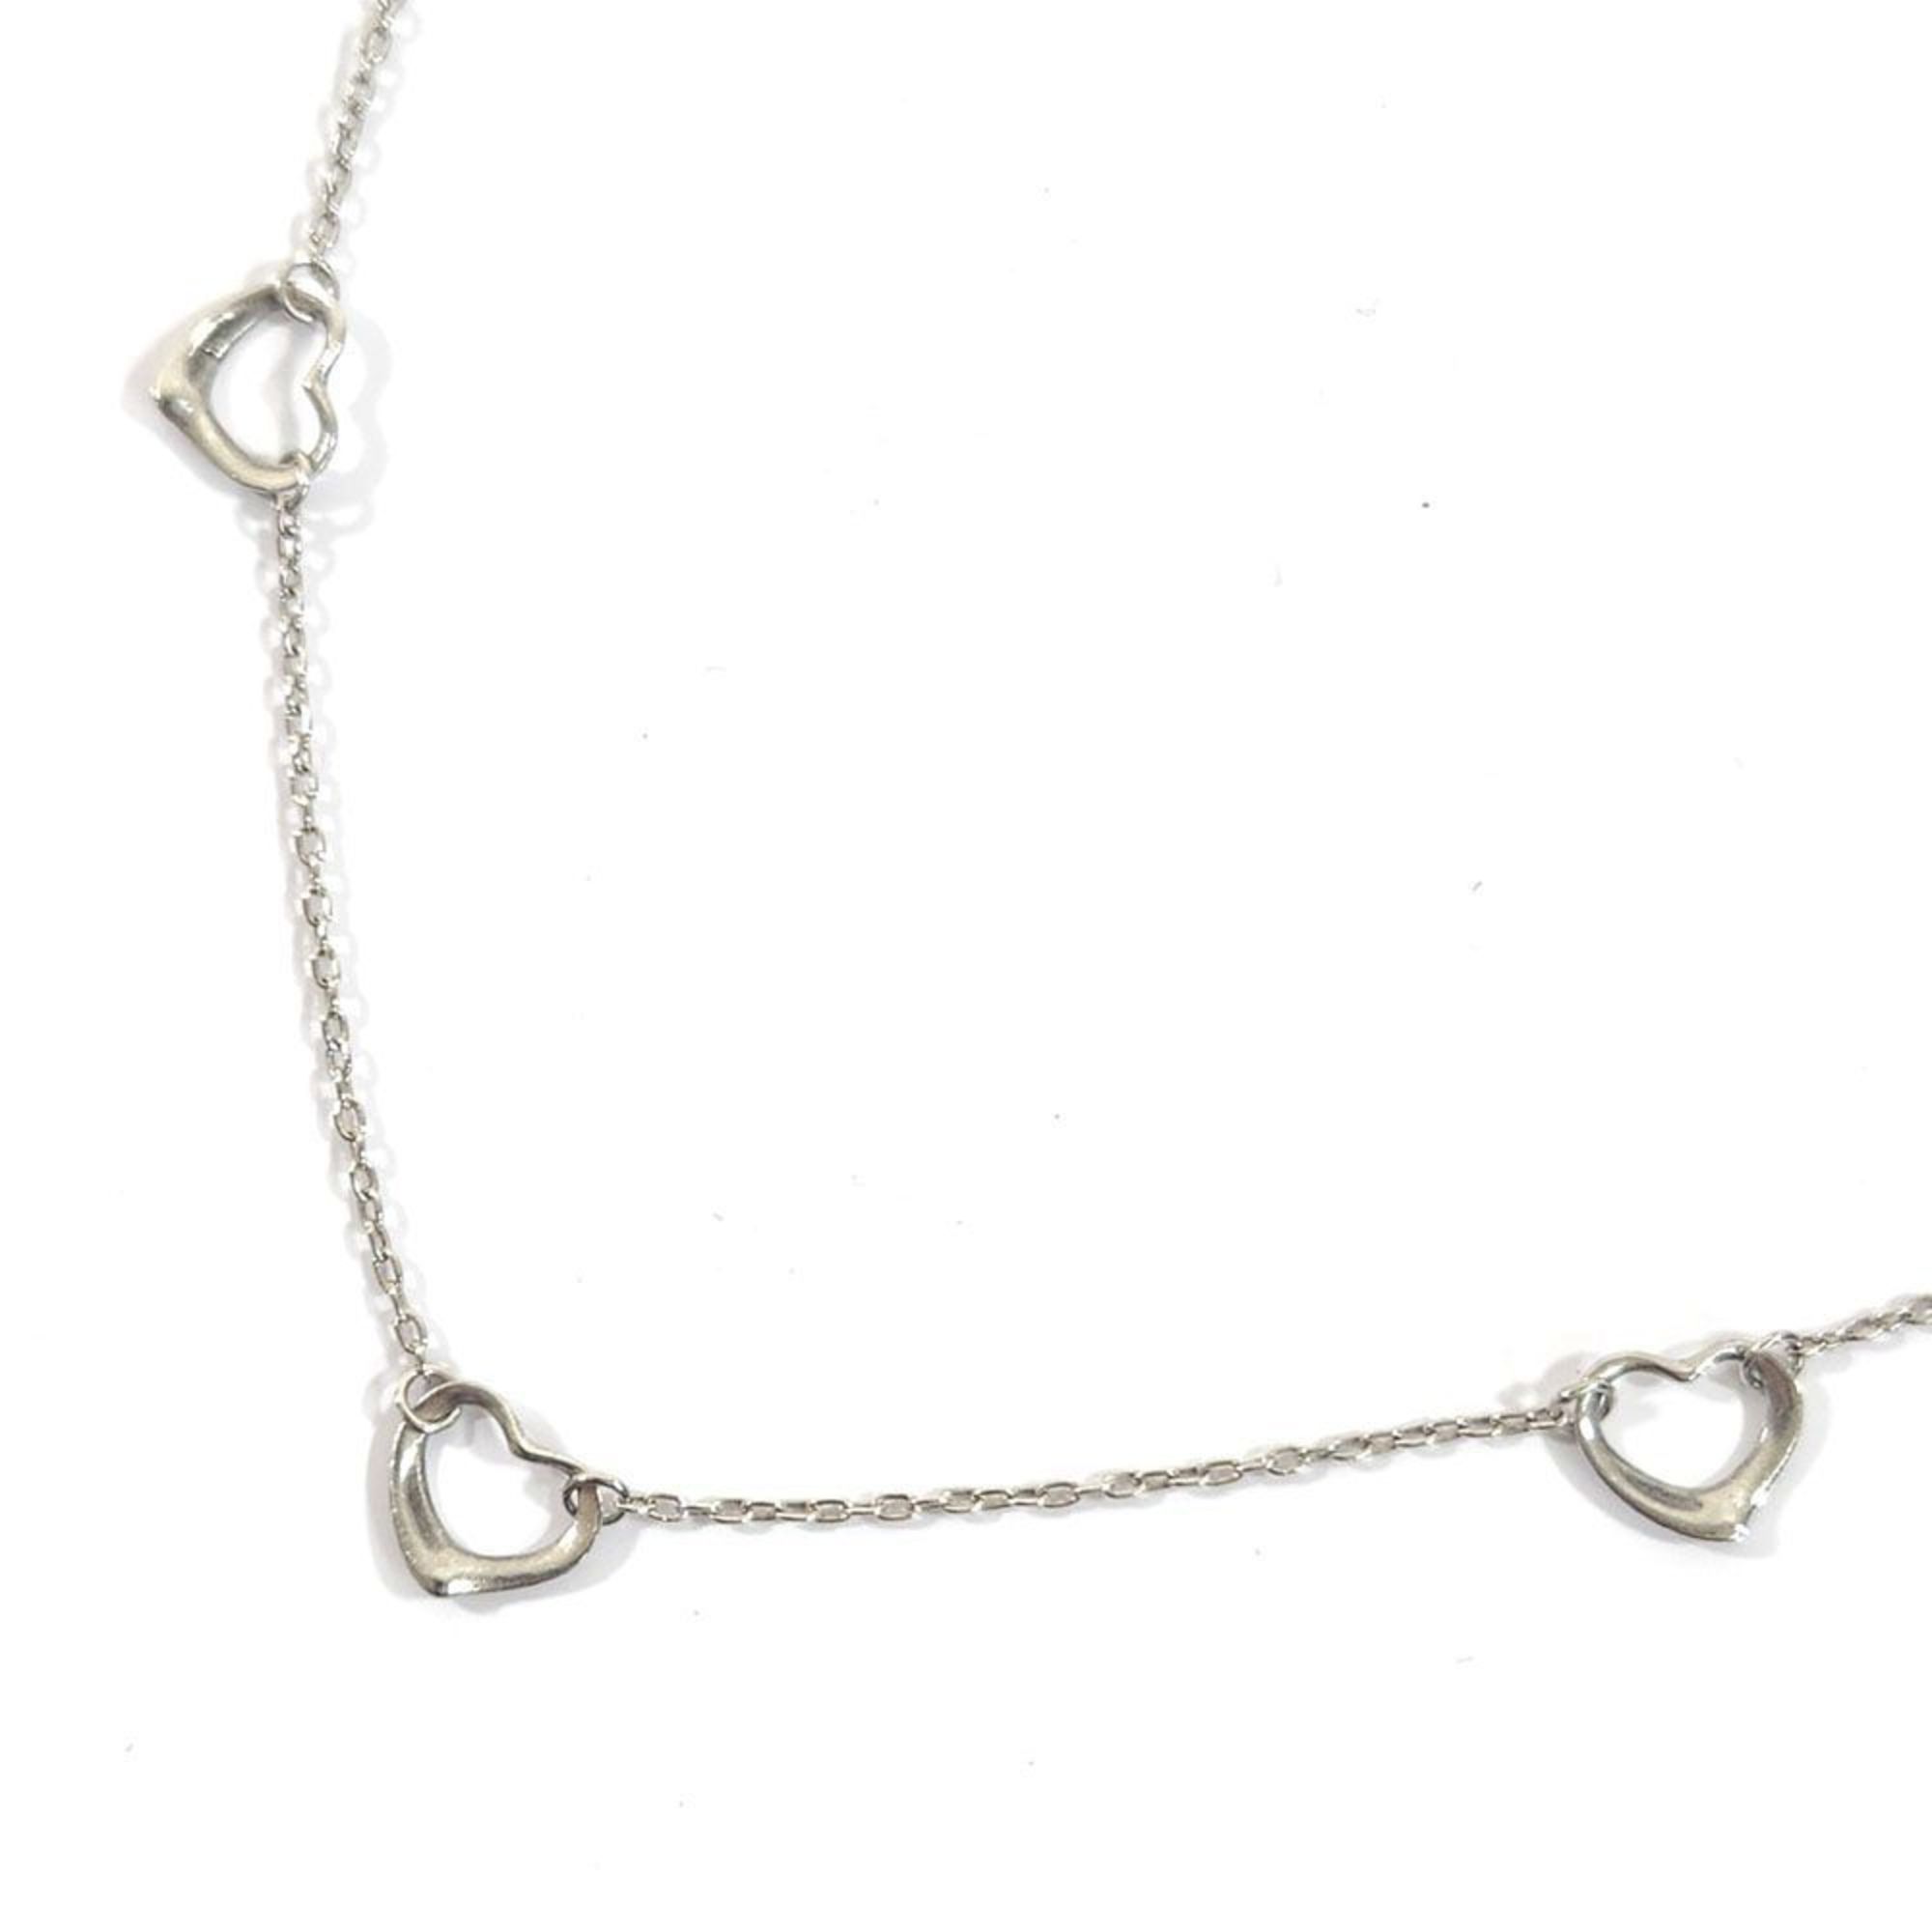 Tiffany & Co. Elsa Peretti 3-Row Heart Necklace Ag925 SV Silver Pendant Sterling